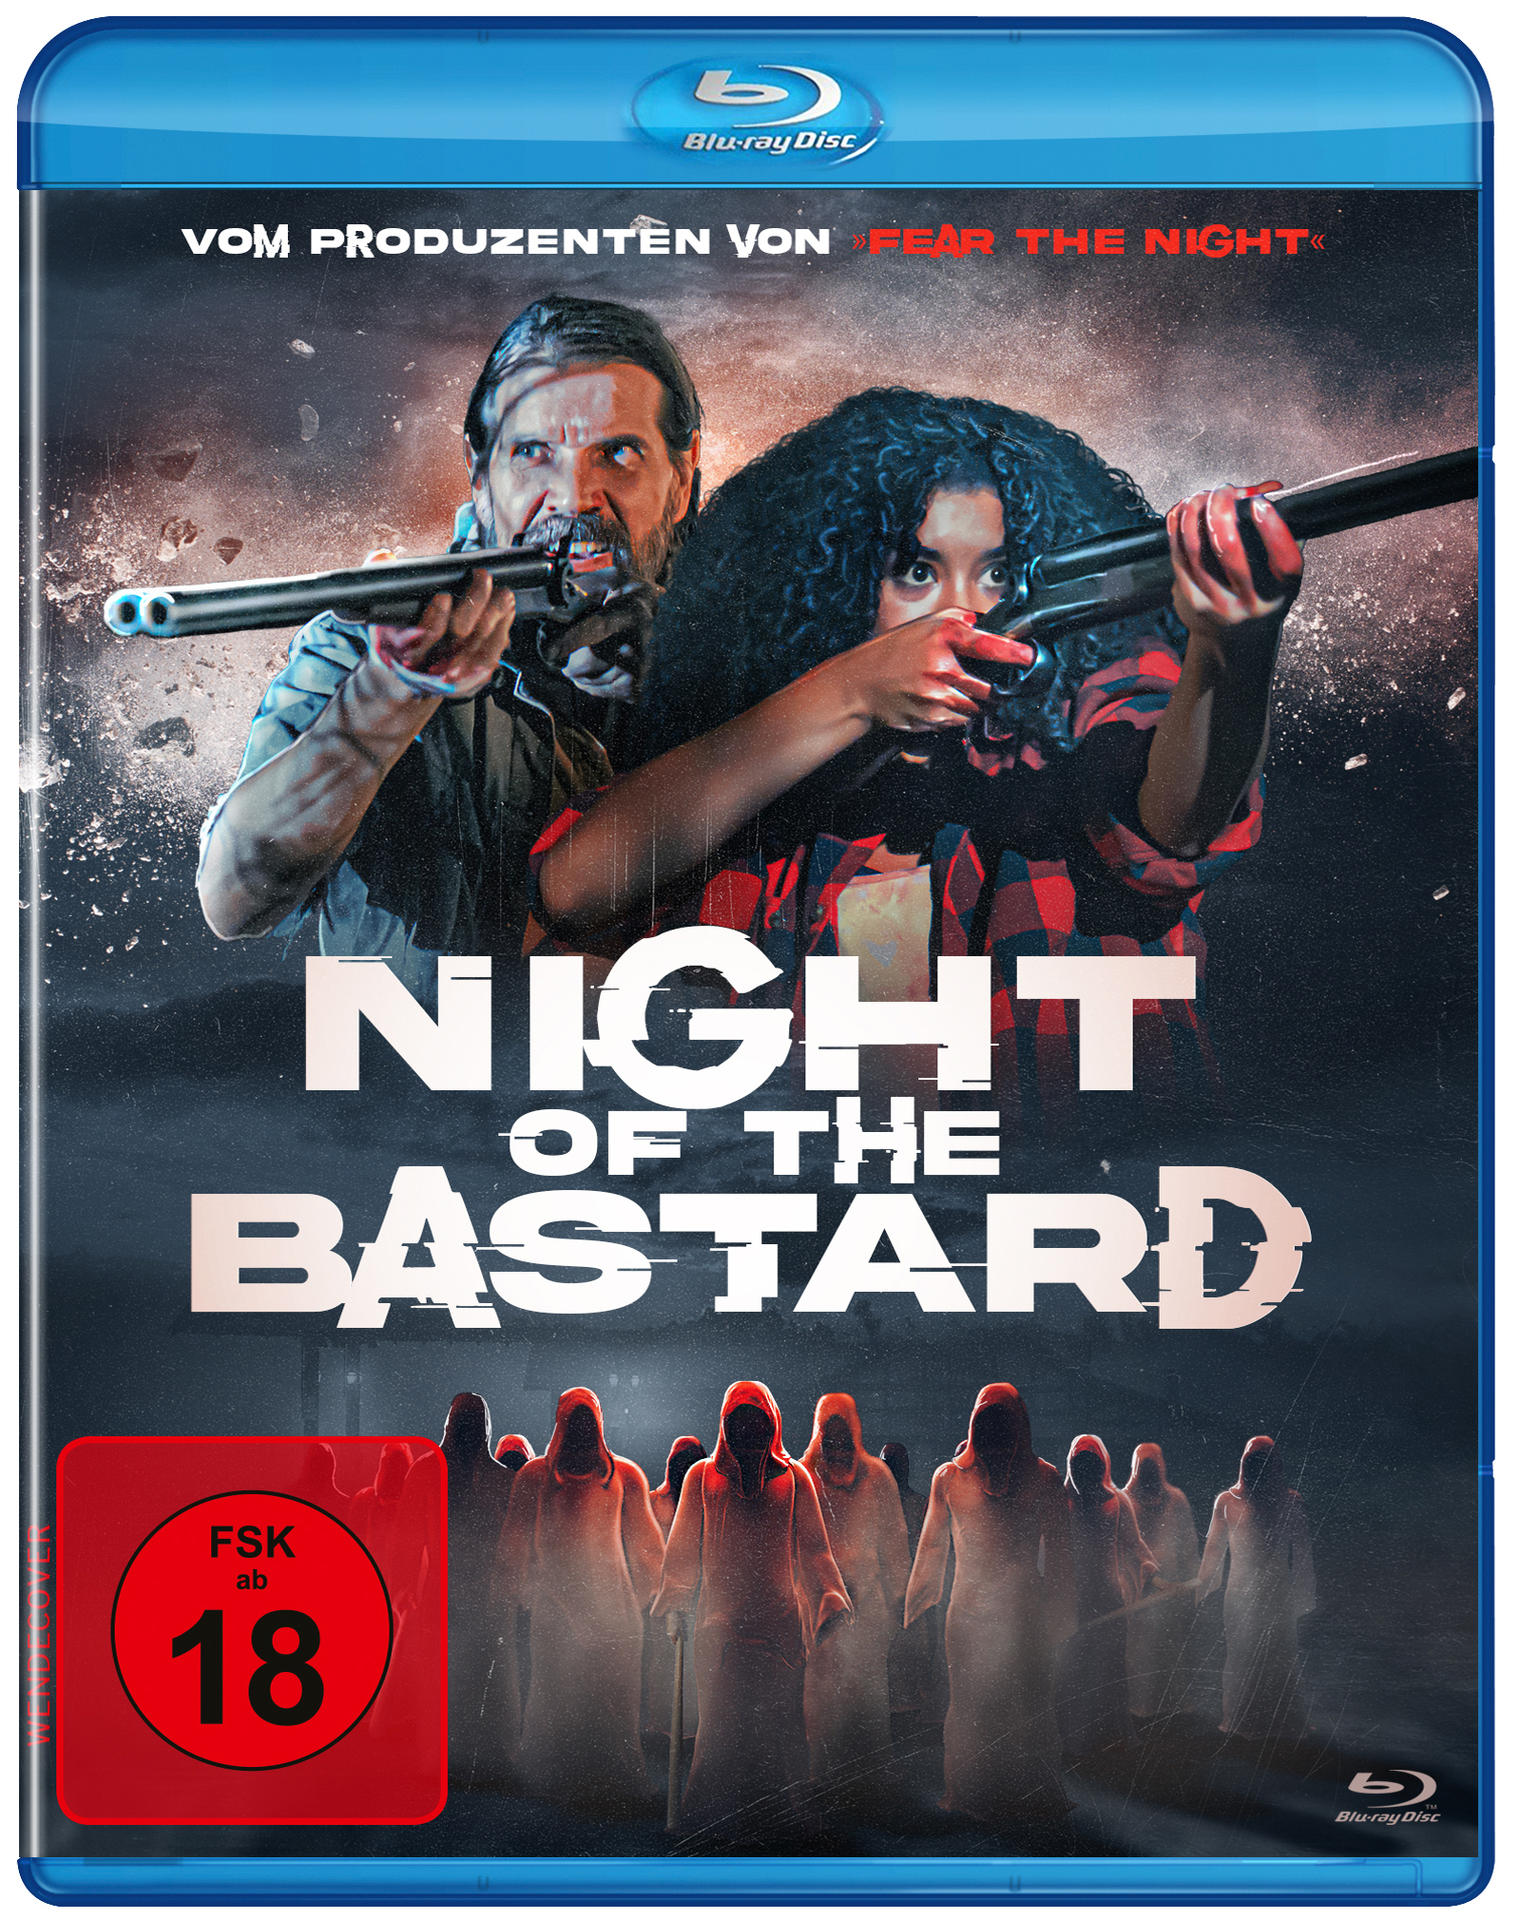 Night Bastard the Blu-ray of